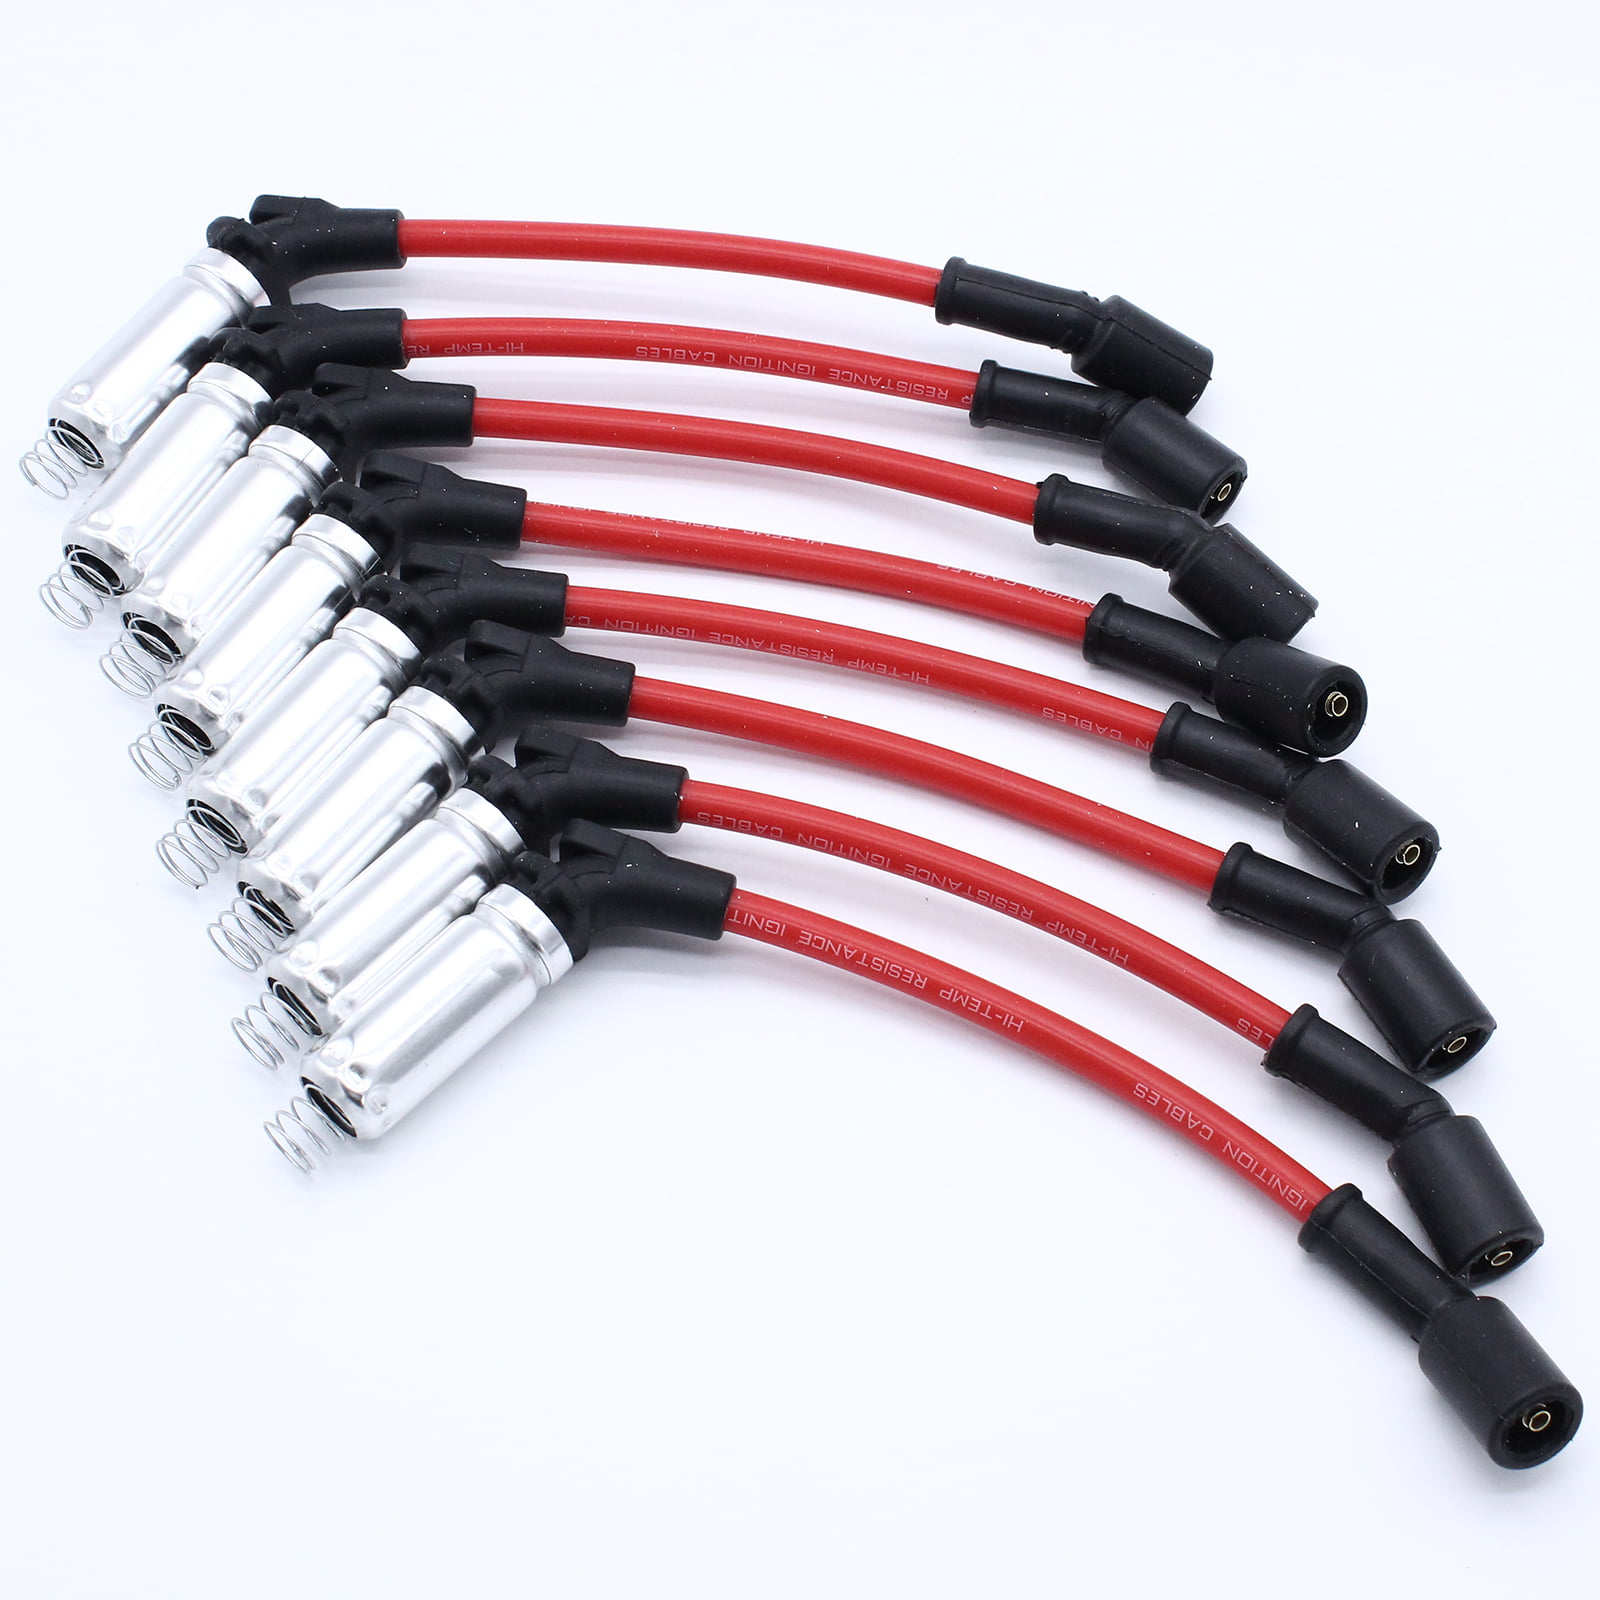 Spark Plug Wires For CHEVY Silverado 1500 GMC Cadillac 4.8L 5.3L 6.0L M8-48322